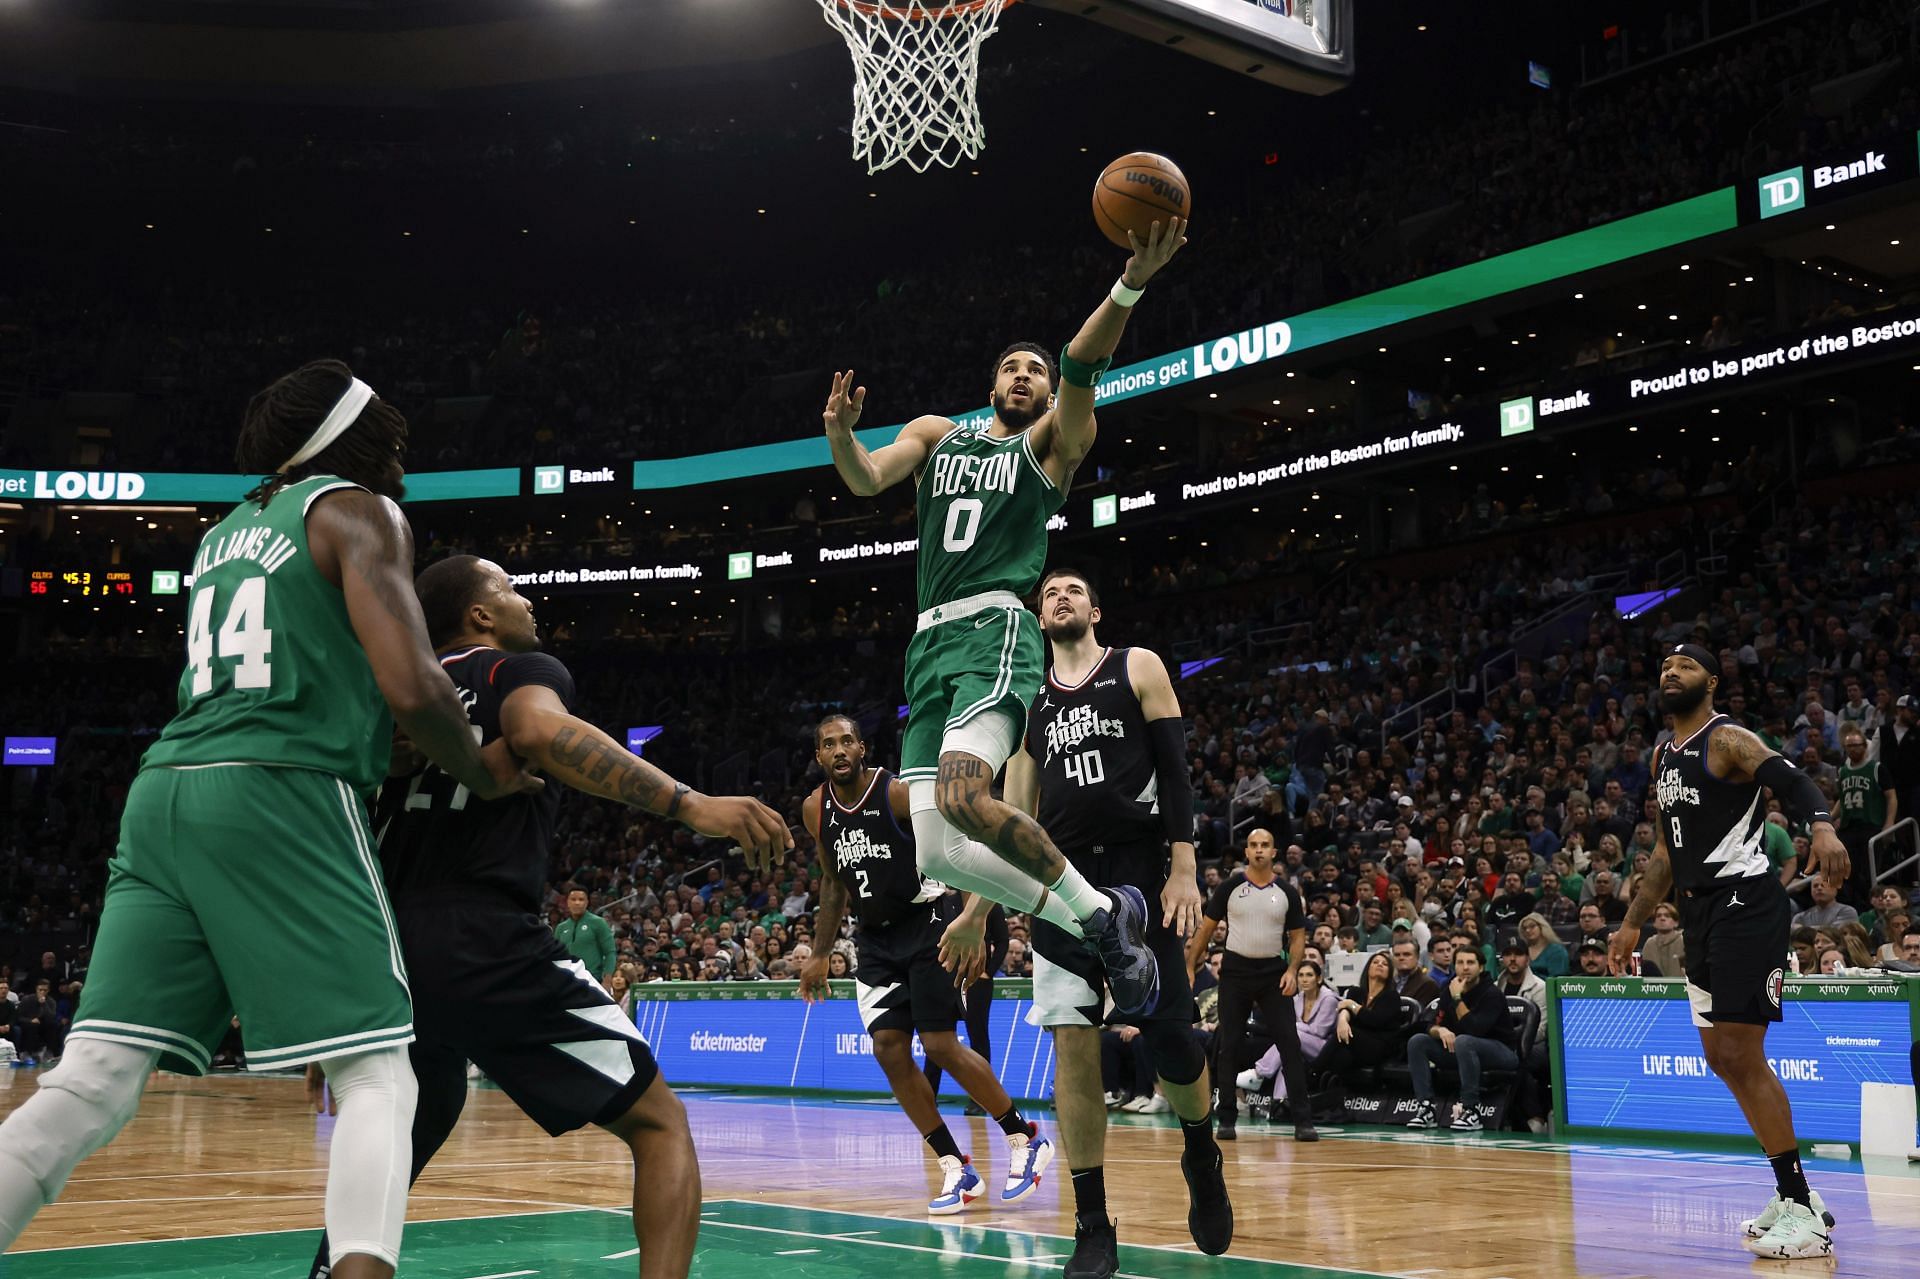 Los Angeles Clippers vs. Boston Celtics.